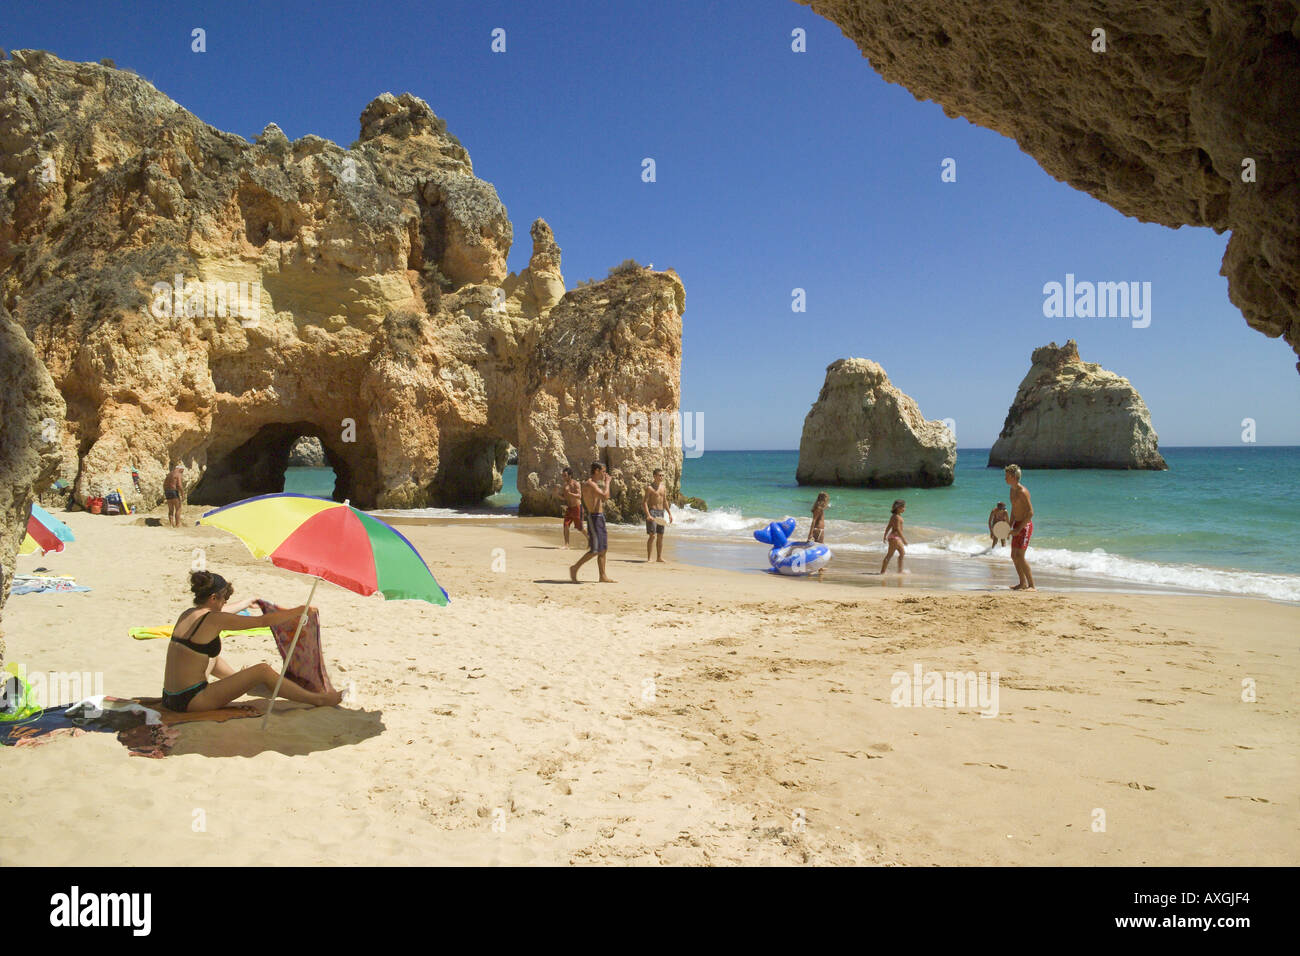 Portugal Algarve Alvor Praia dos Três Irmãos strand und felsen Bögen in den Klippen im Sommer Stockfoto